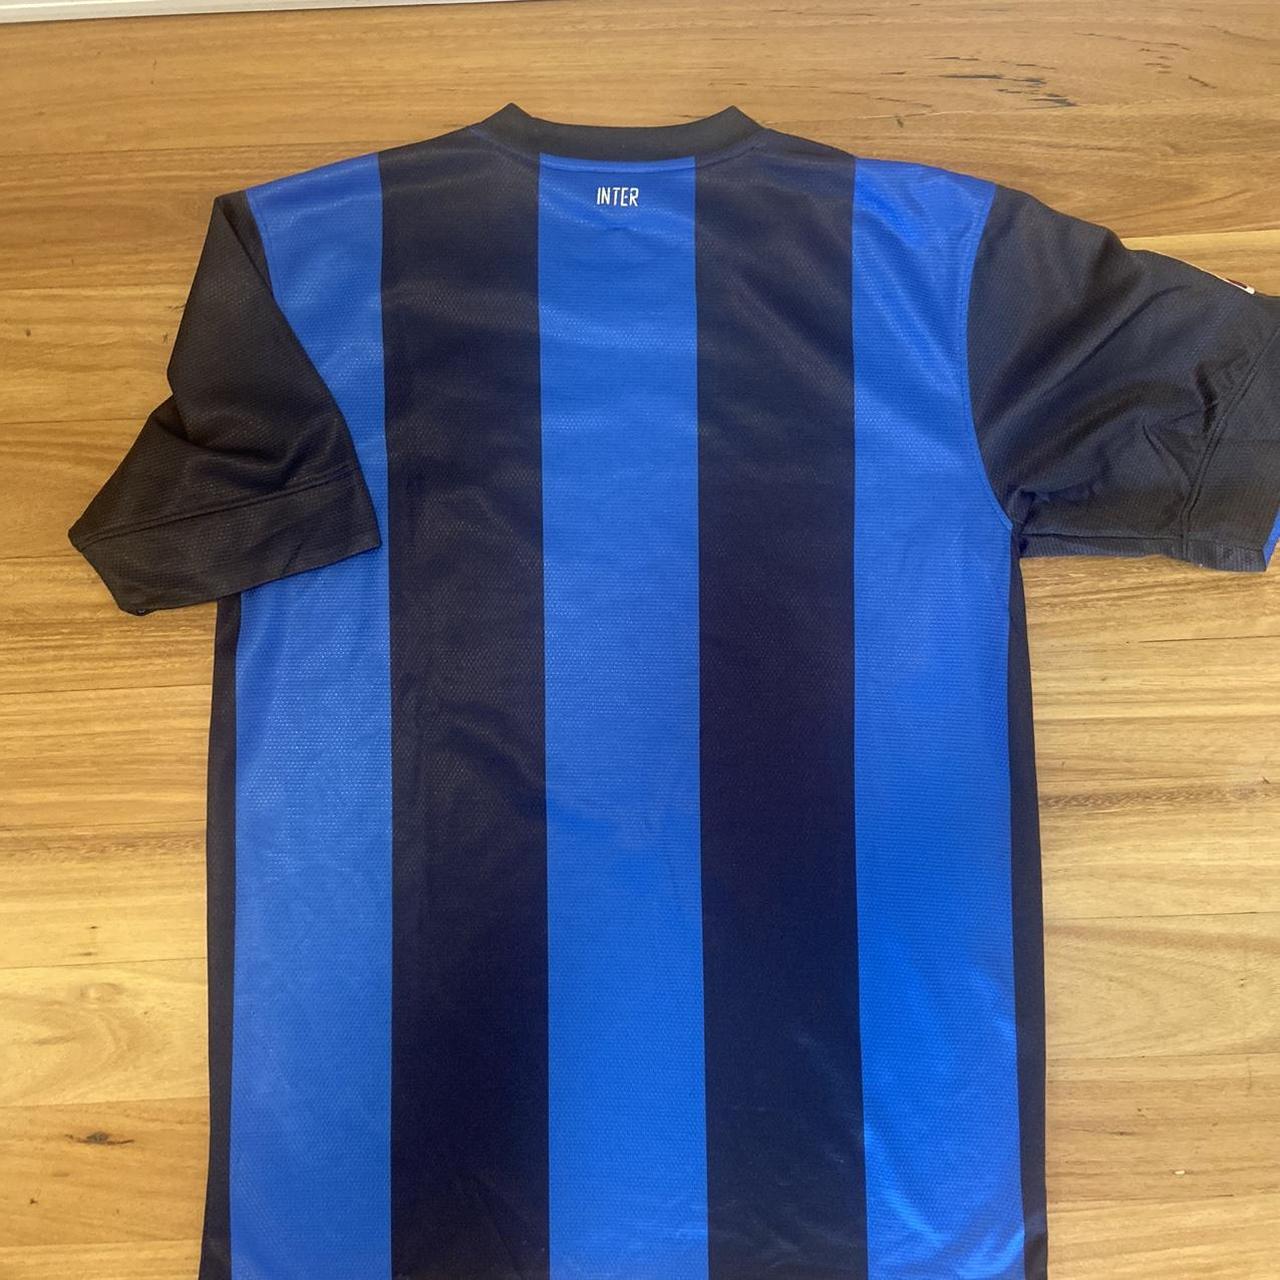 Vintage inter Milan soccer jersey top shirt - blue... - Depop